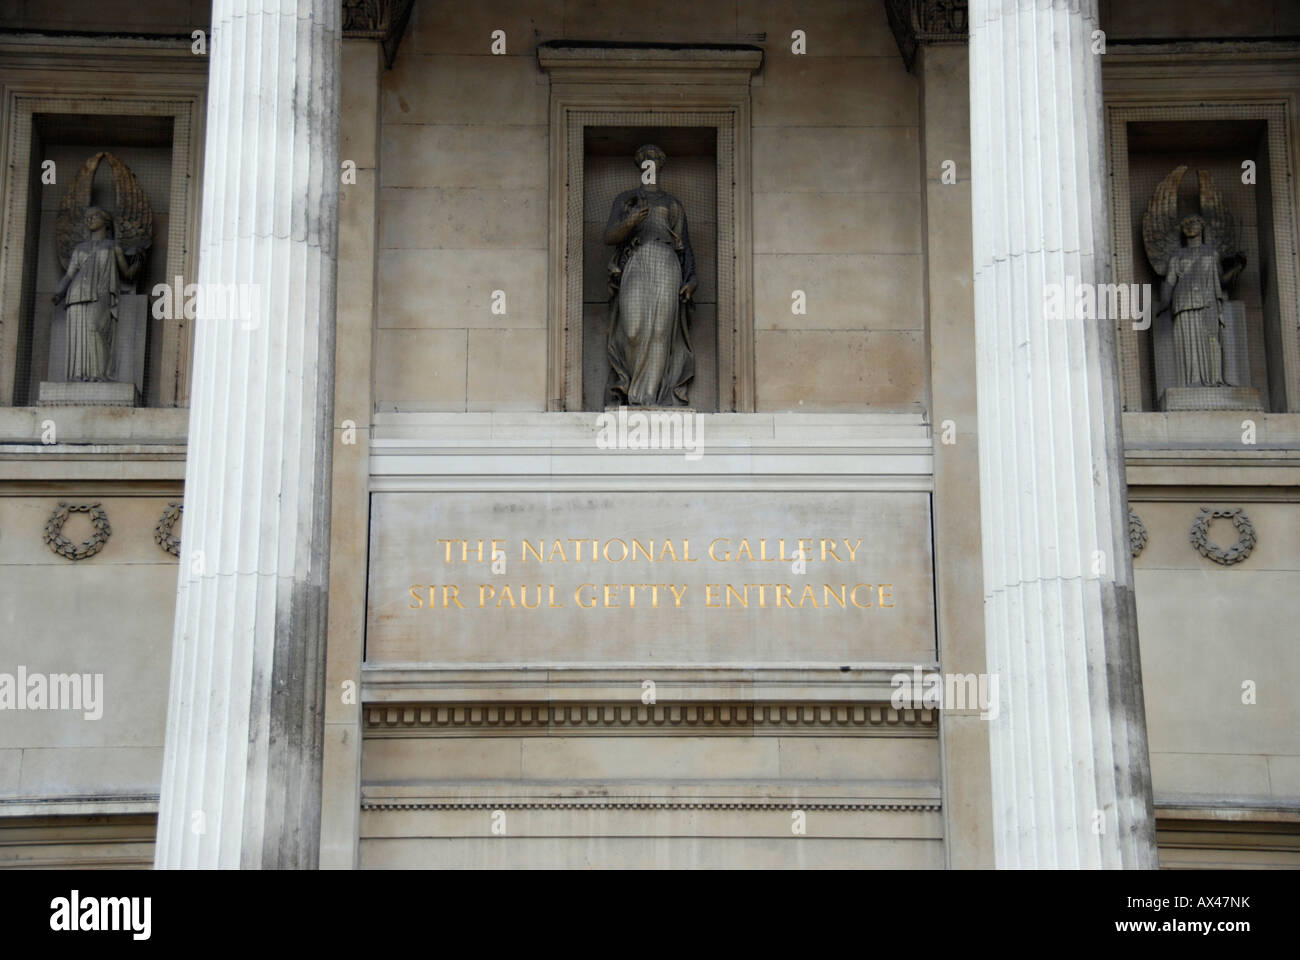 The National Gallery, Sir Paul Getty Entrance, Trafalgar Square, London Stock Photo